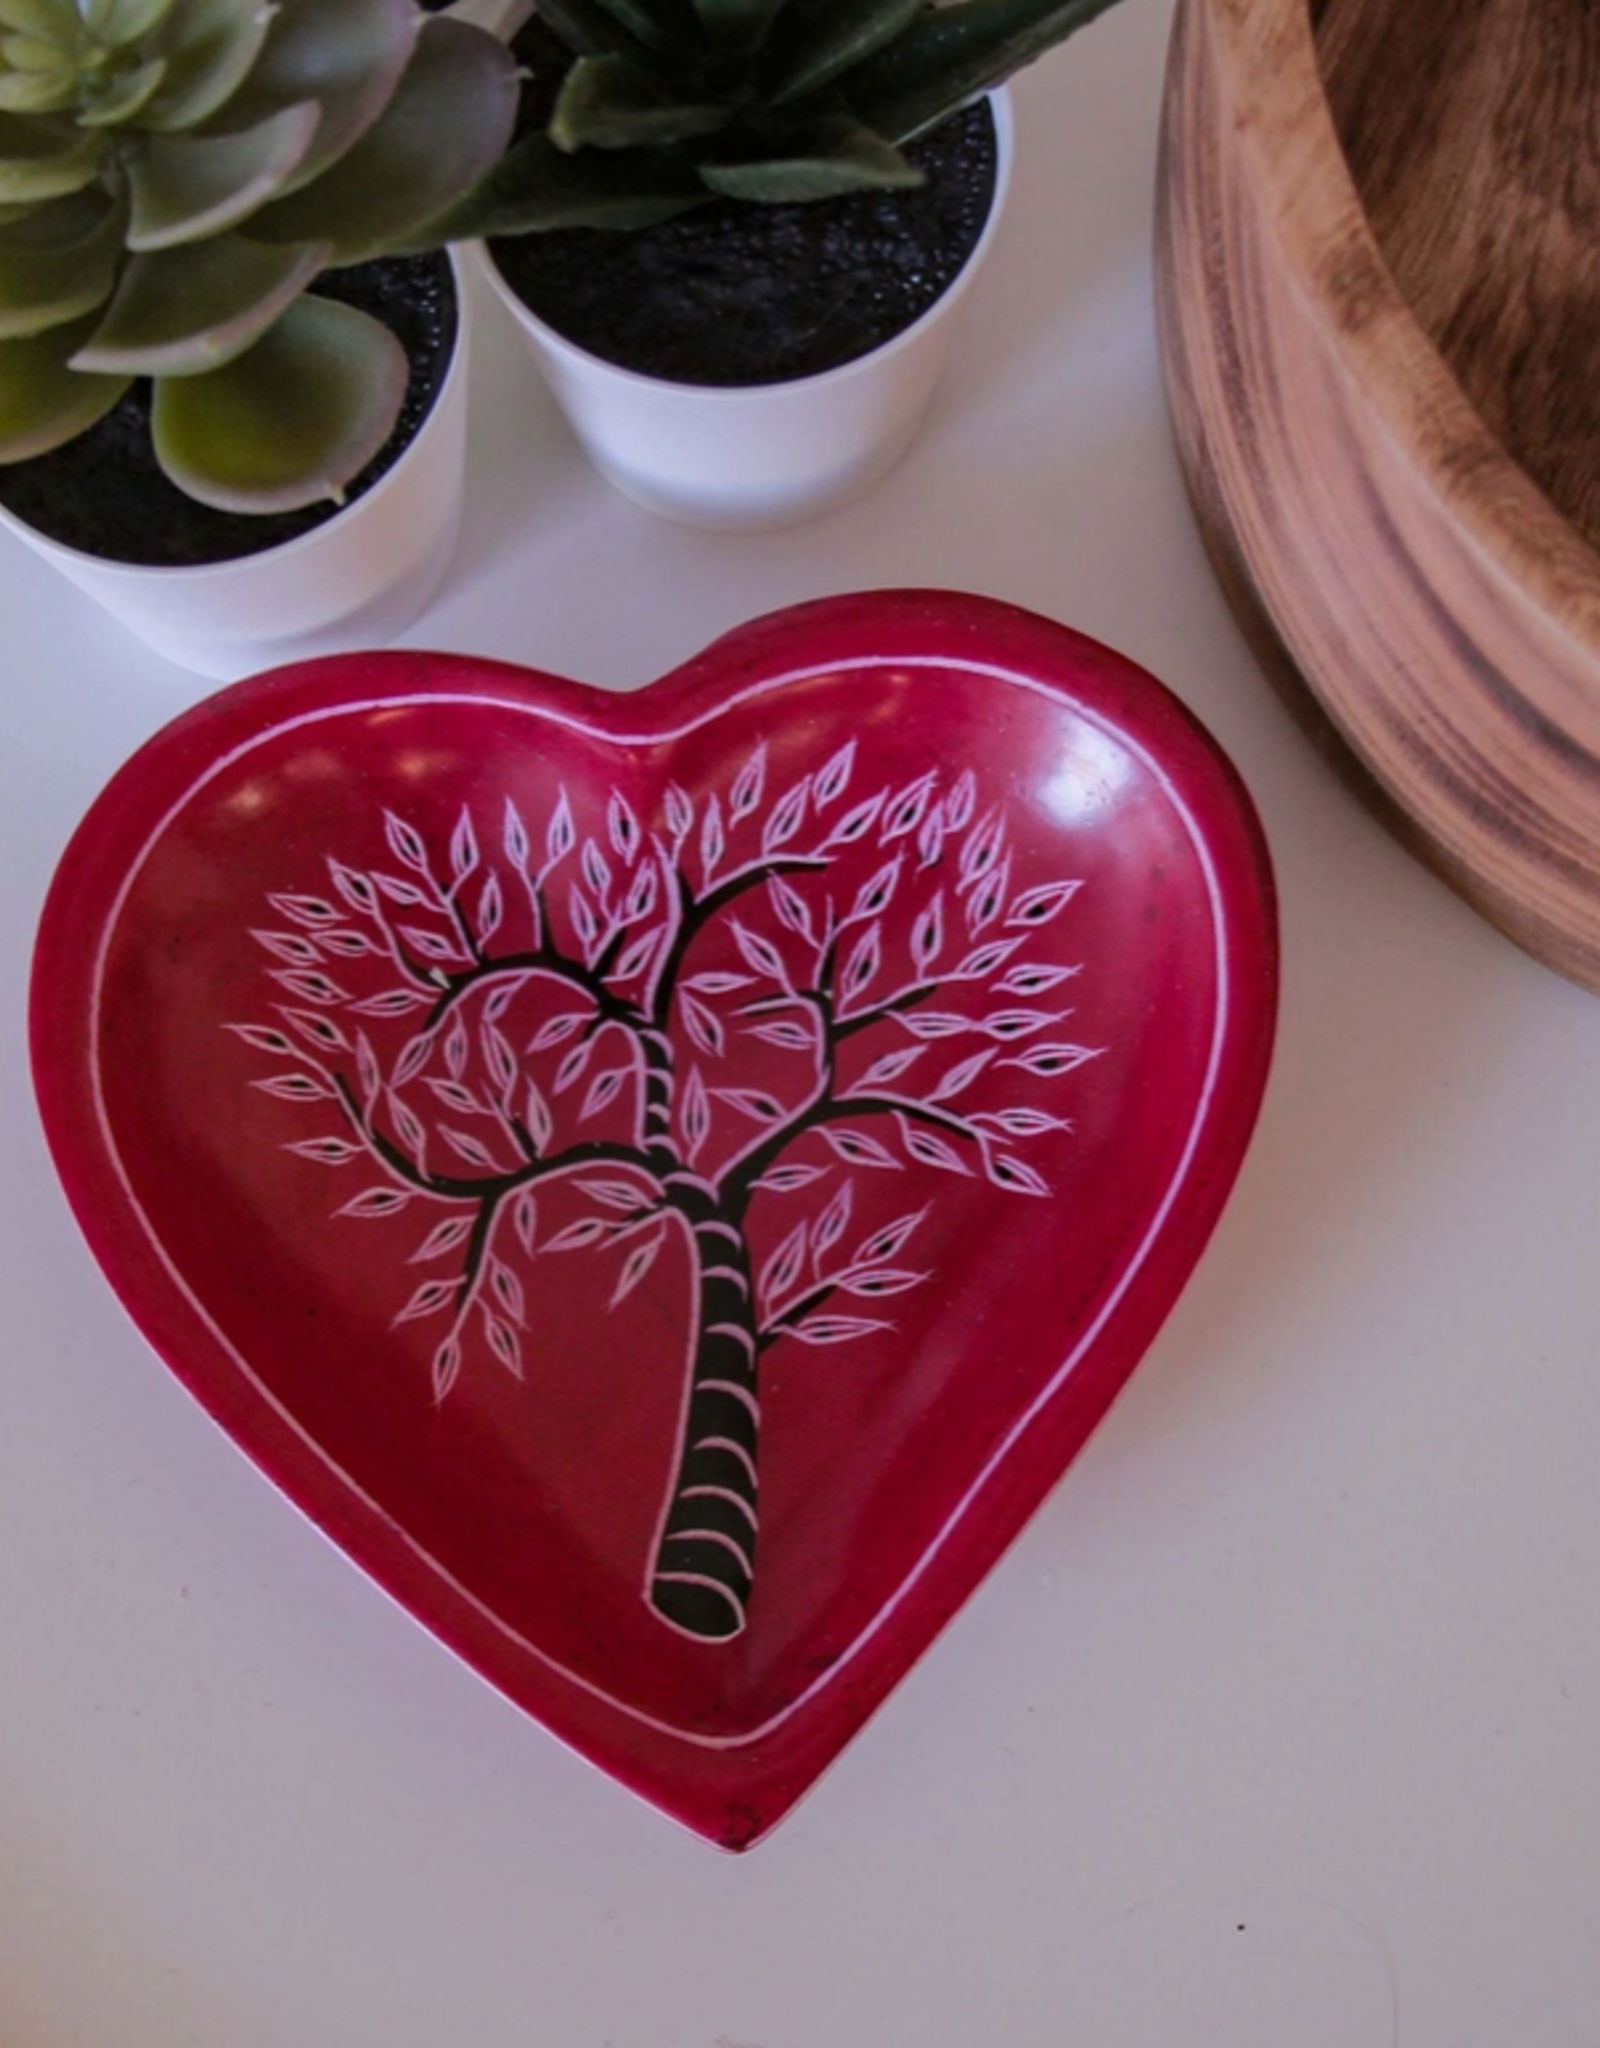 Global Crafts Soapstone Heart Trinket Bowl - Medium Red Acacia Tree